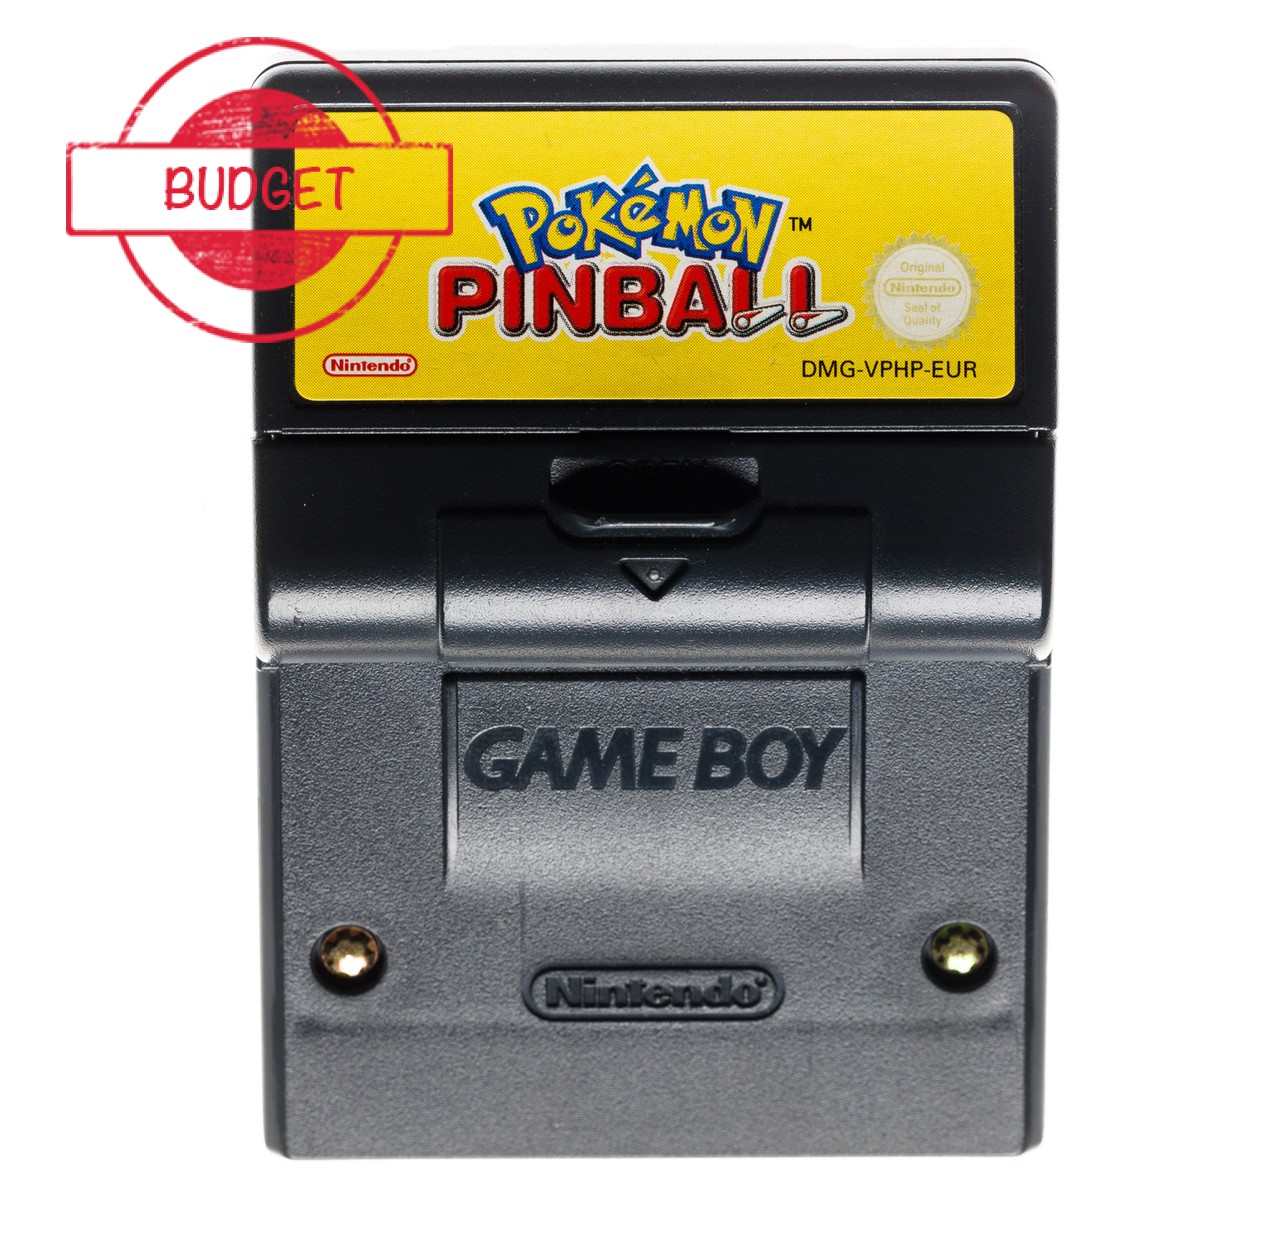 Pokemon Pinball - Budget Kopen | Gameboy Color Games